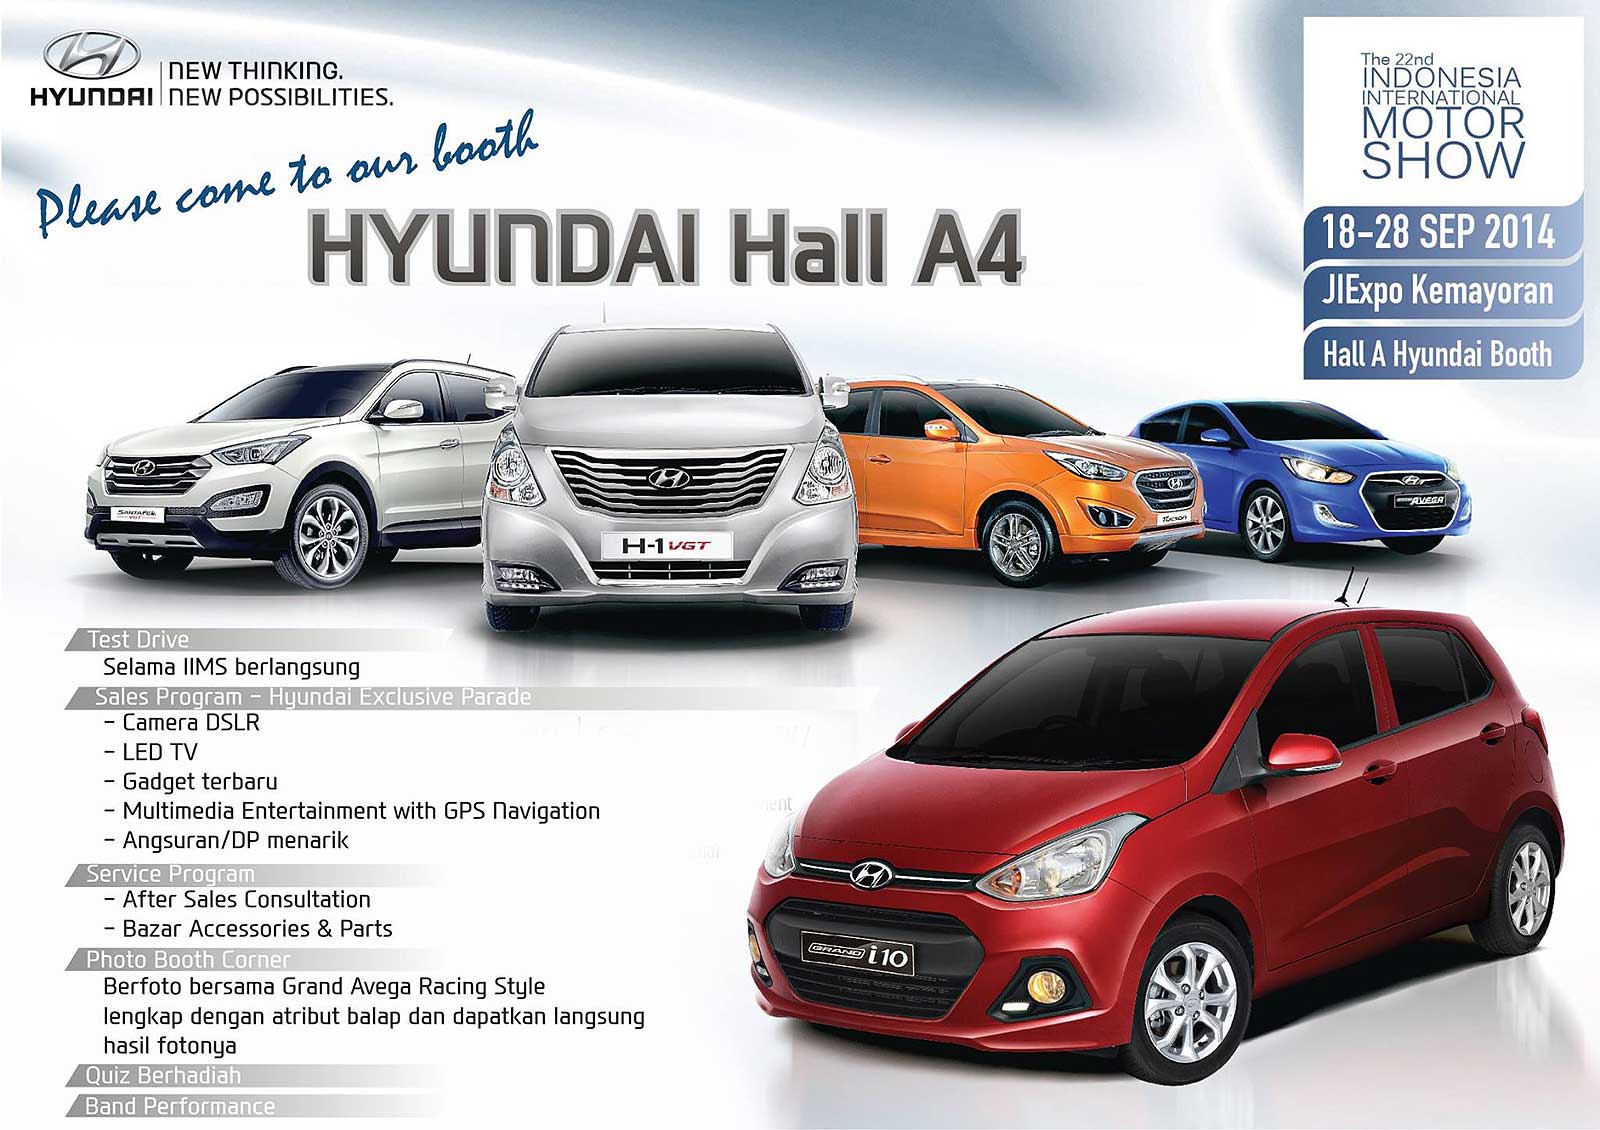 Hyundai, Promo Bonus Hyundai Indonesia di IIMS 2014: Beli Hyundai di IIMS 2014, Dapatkan Promo Spesial!